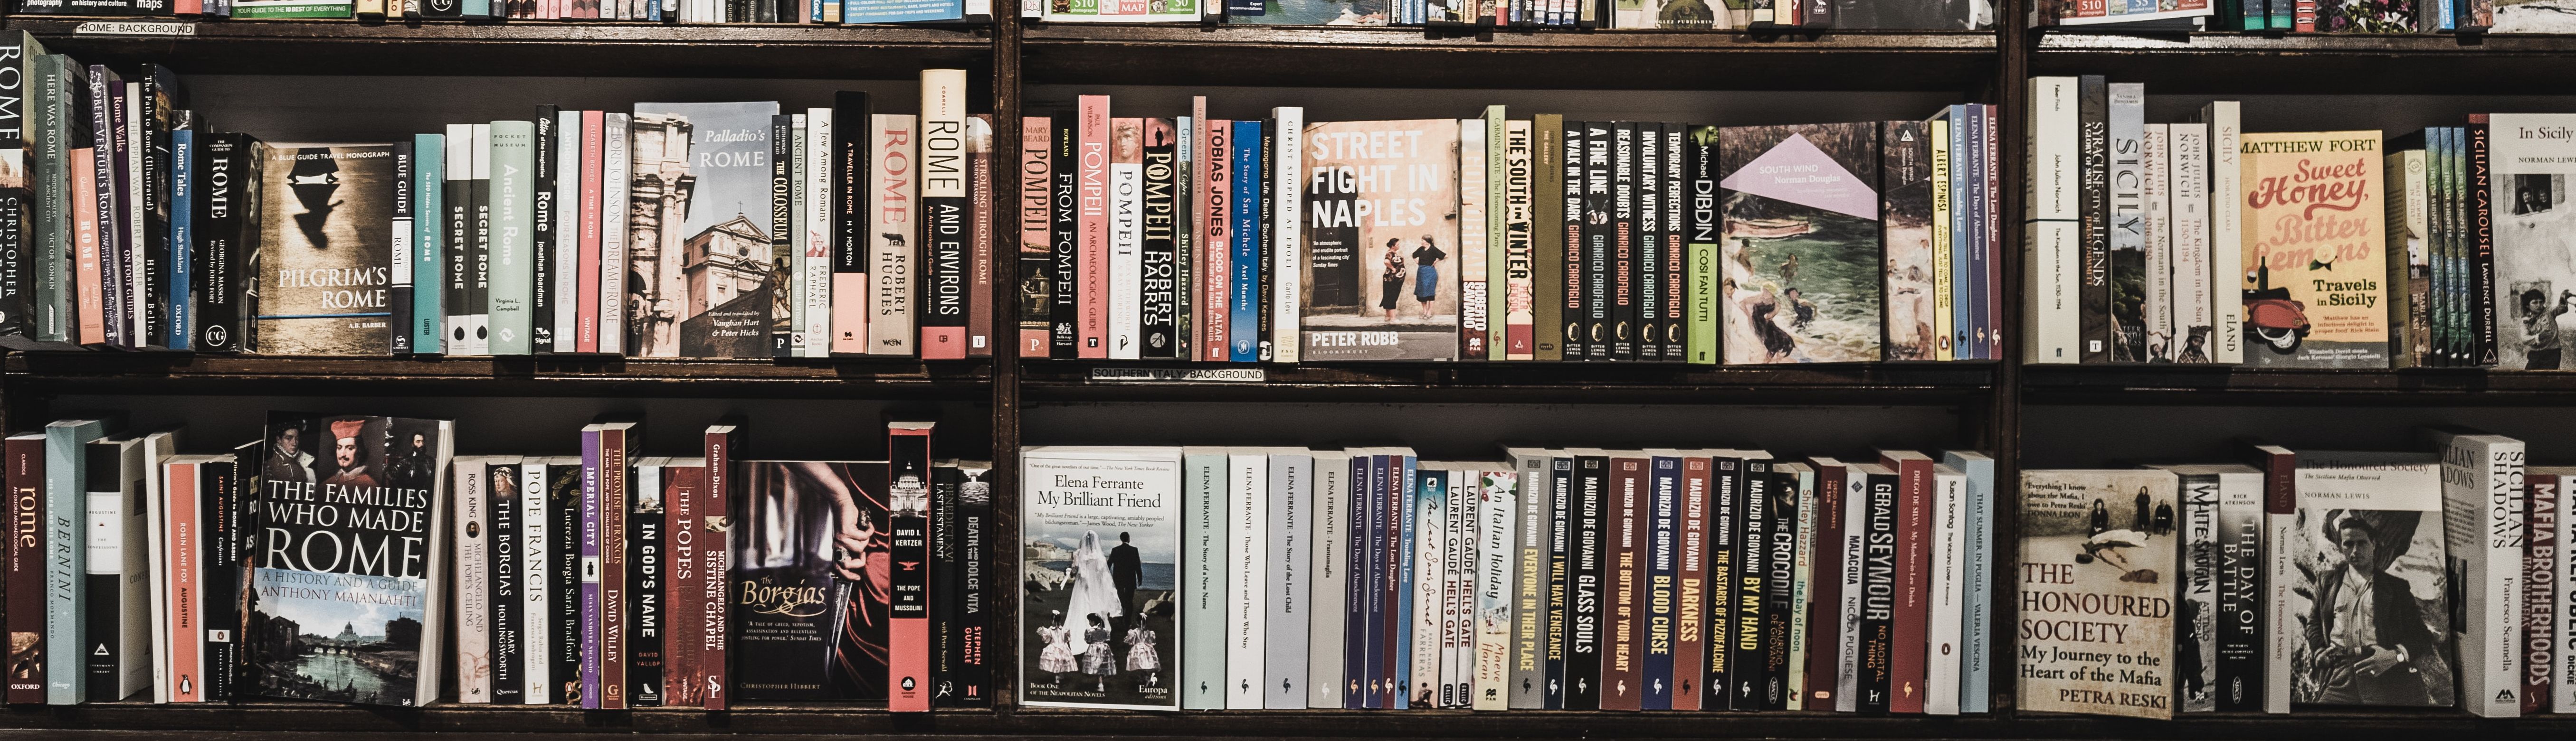 bookshelf with closeup of books